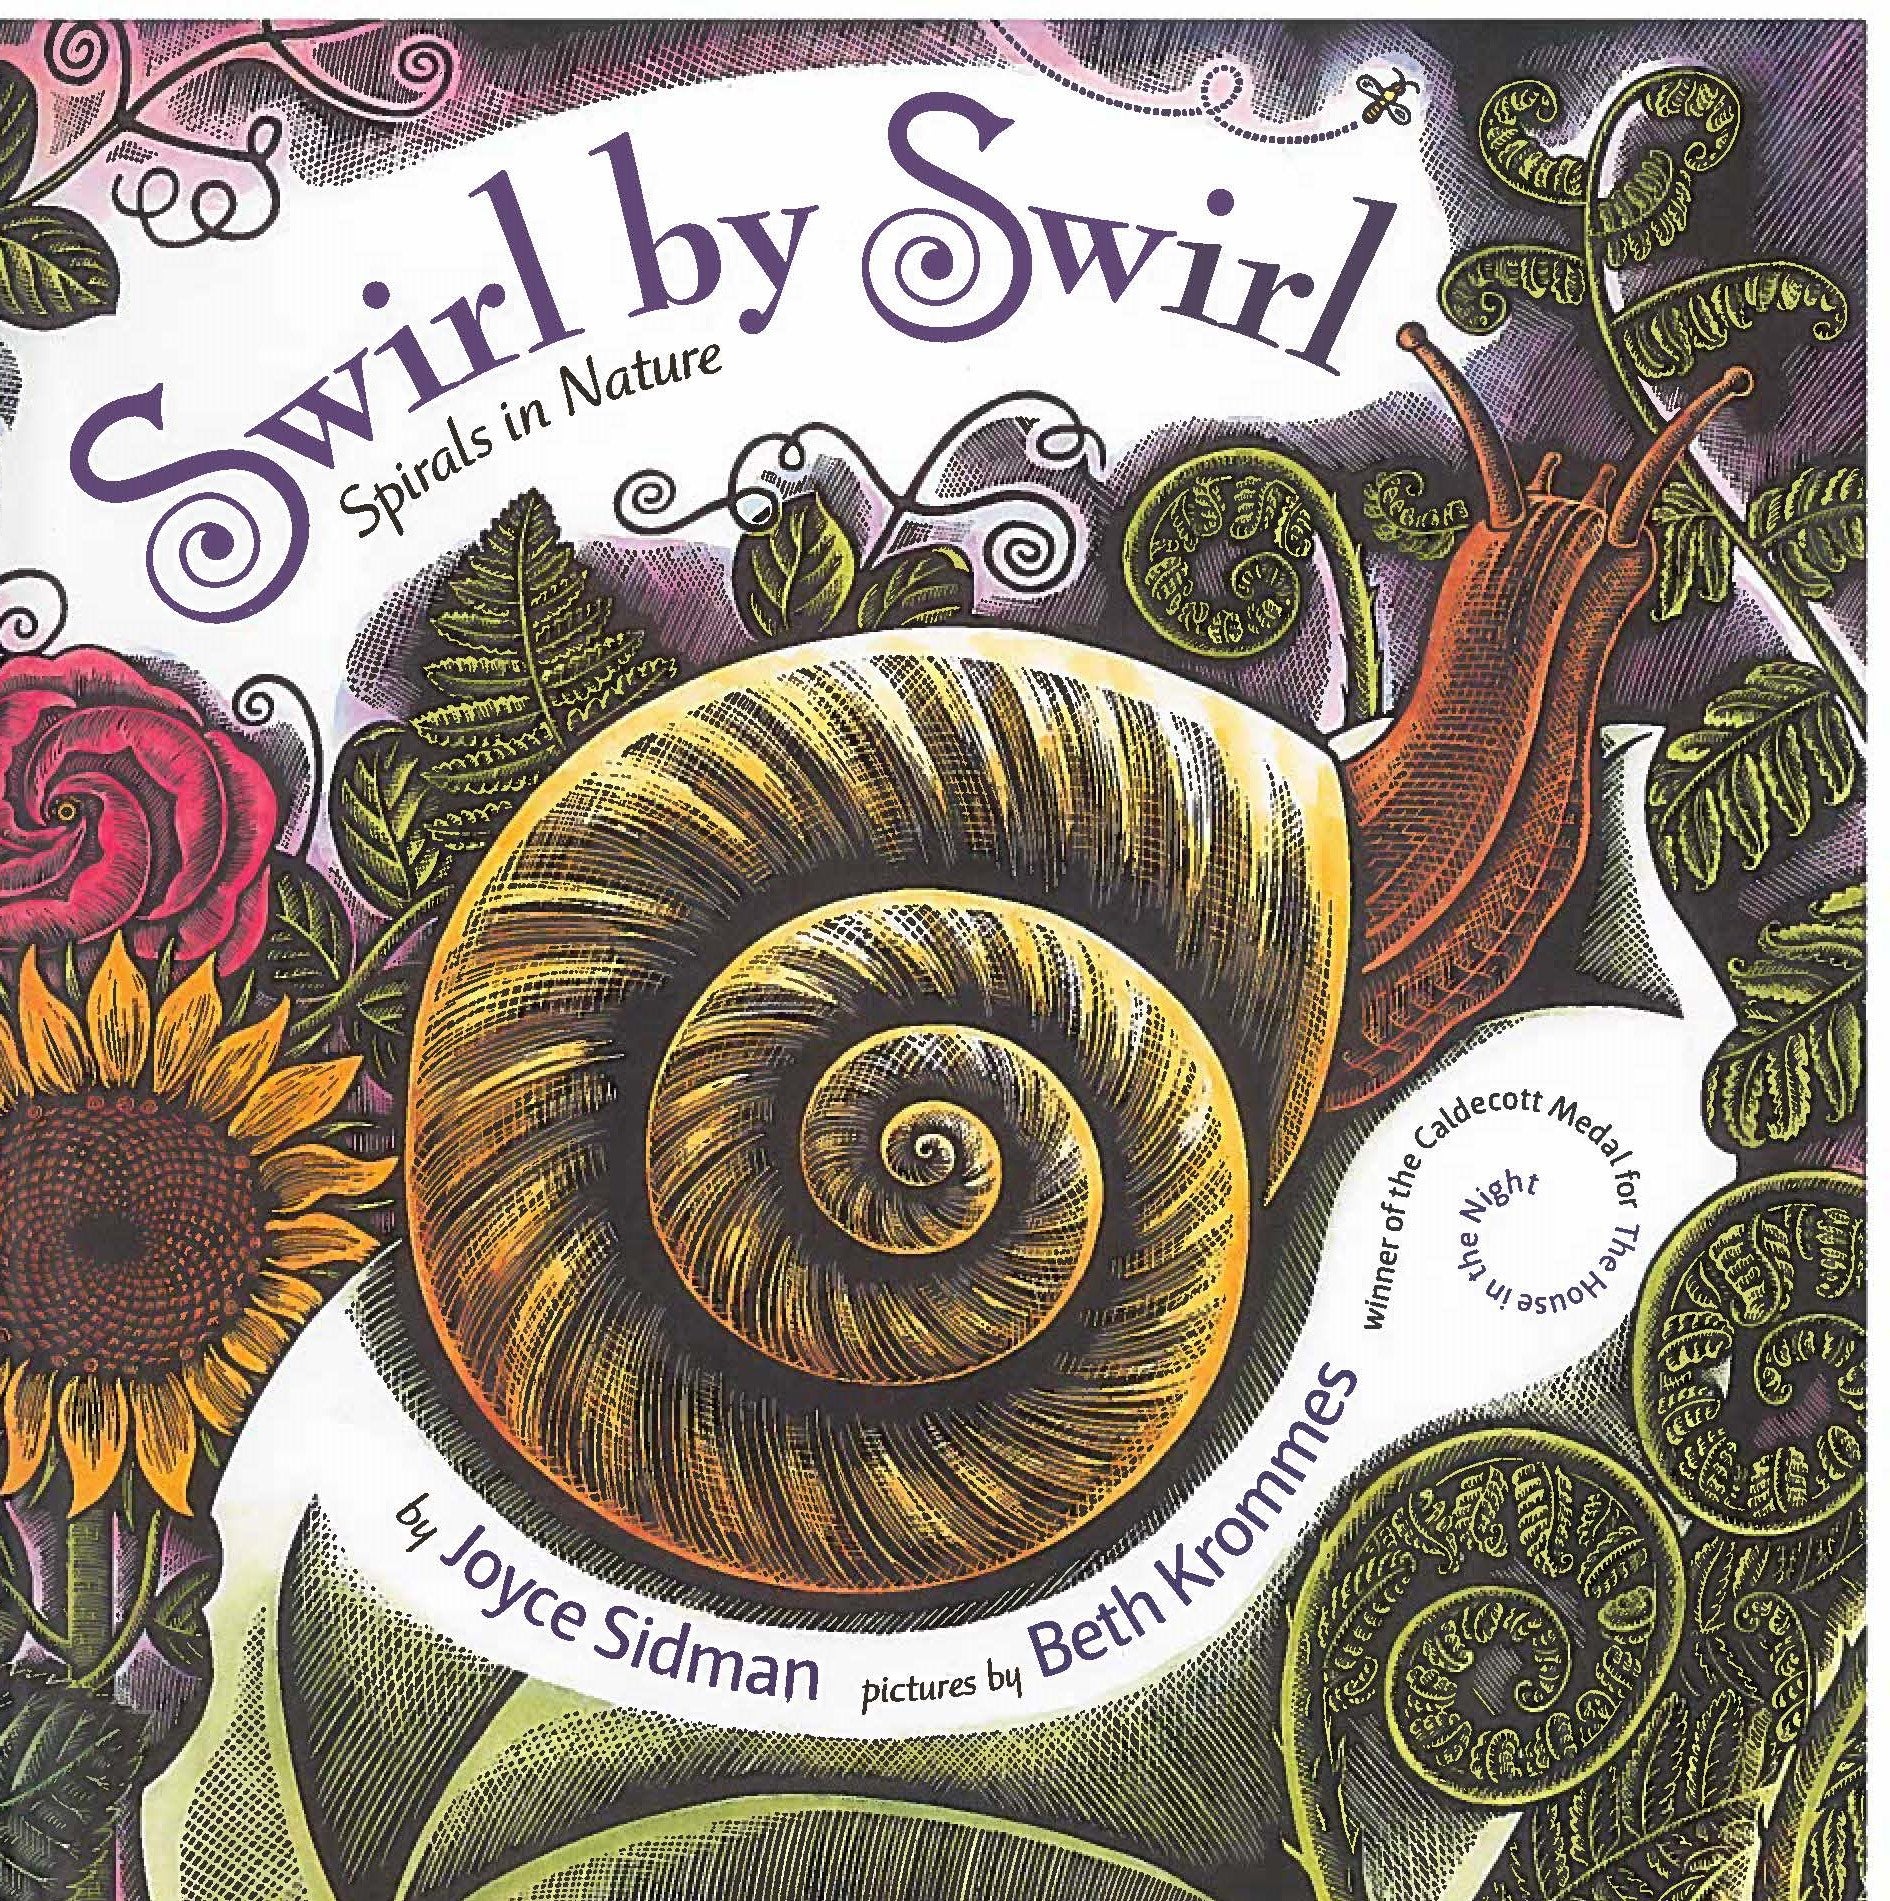 Book Cover of "Swirl by Swirl Spirals in Nature" by Joyce Sidman.jpg